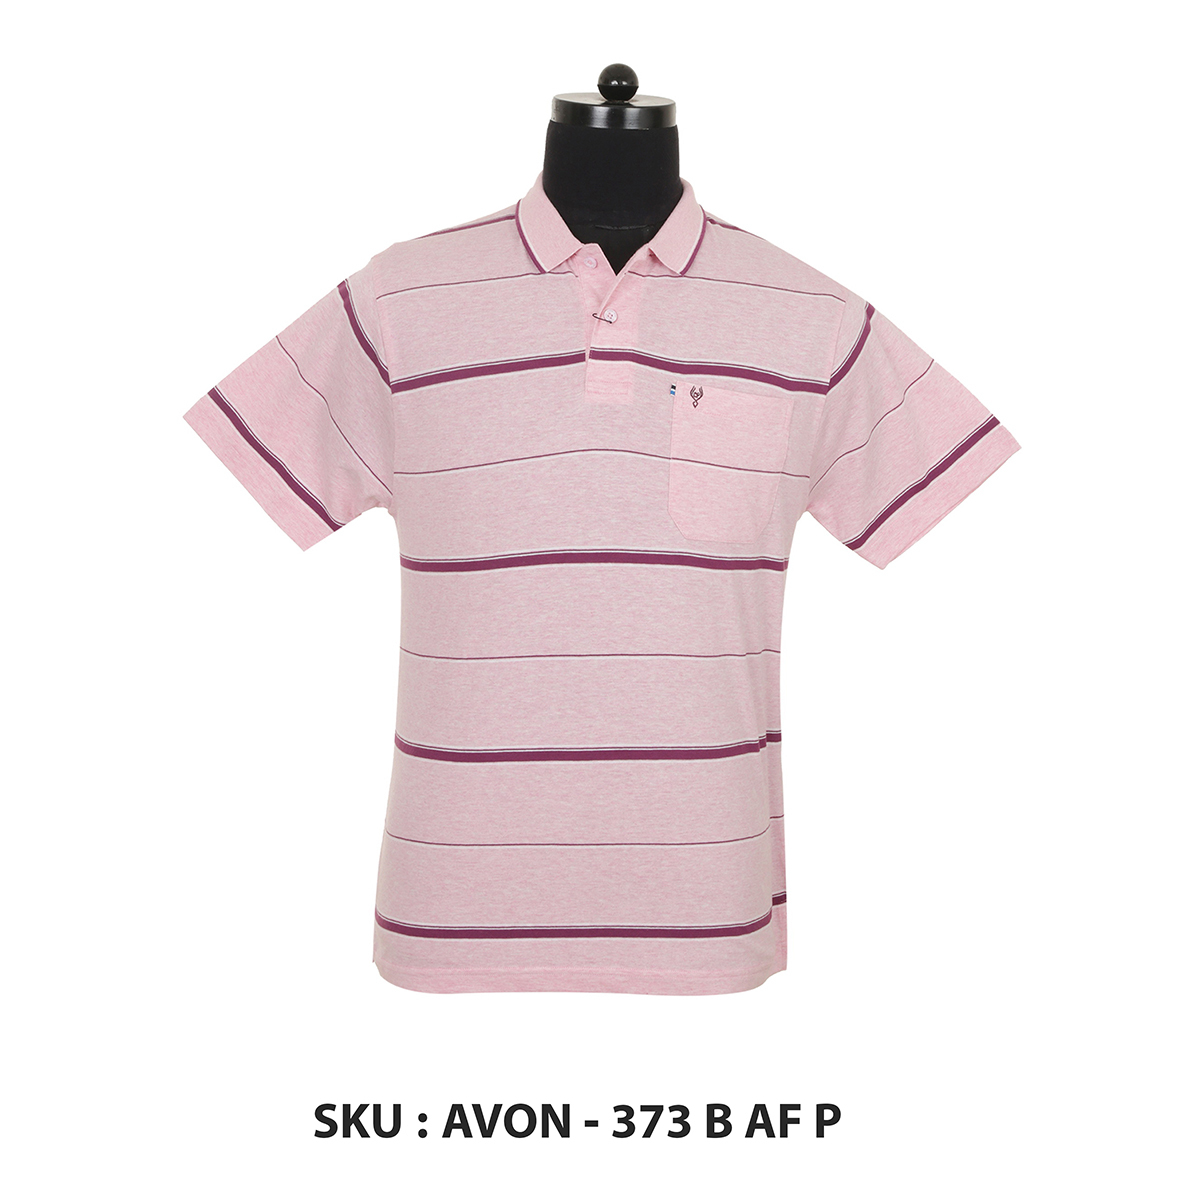 Classic Polo Mens T Shirt Avon - 373 B Af P Pink XL